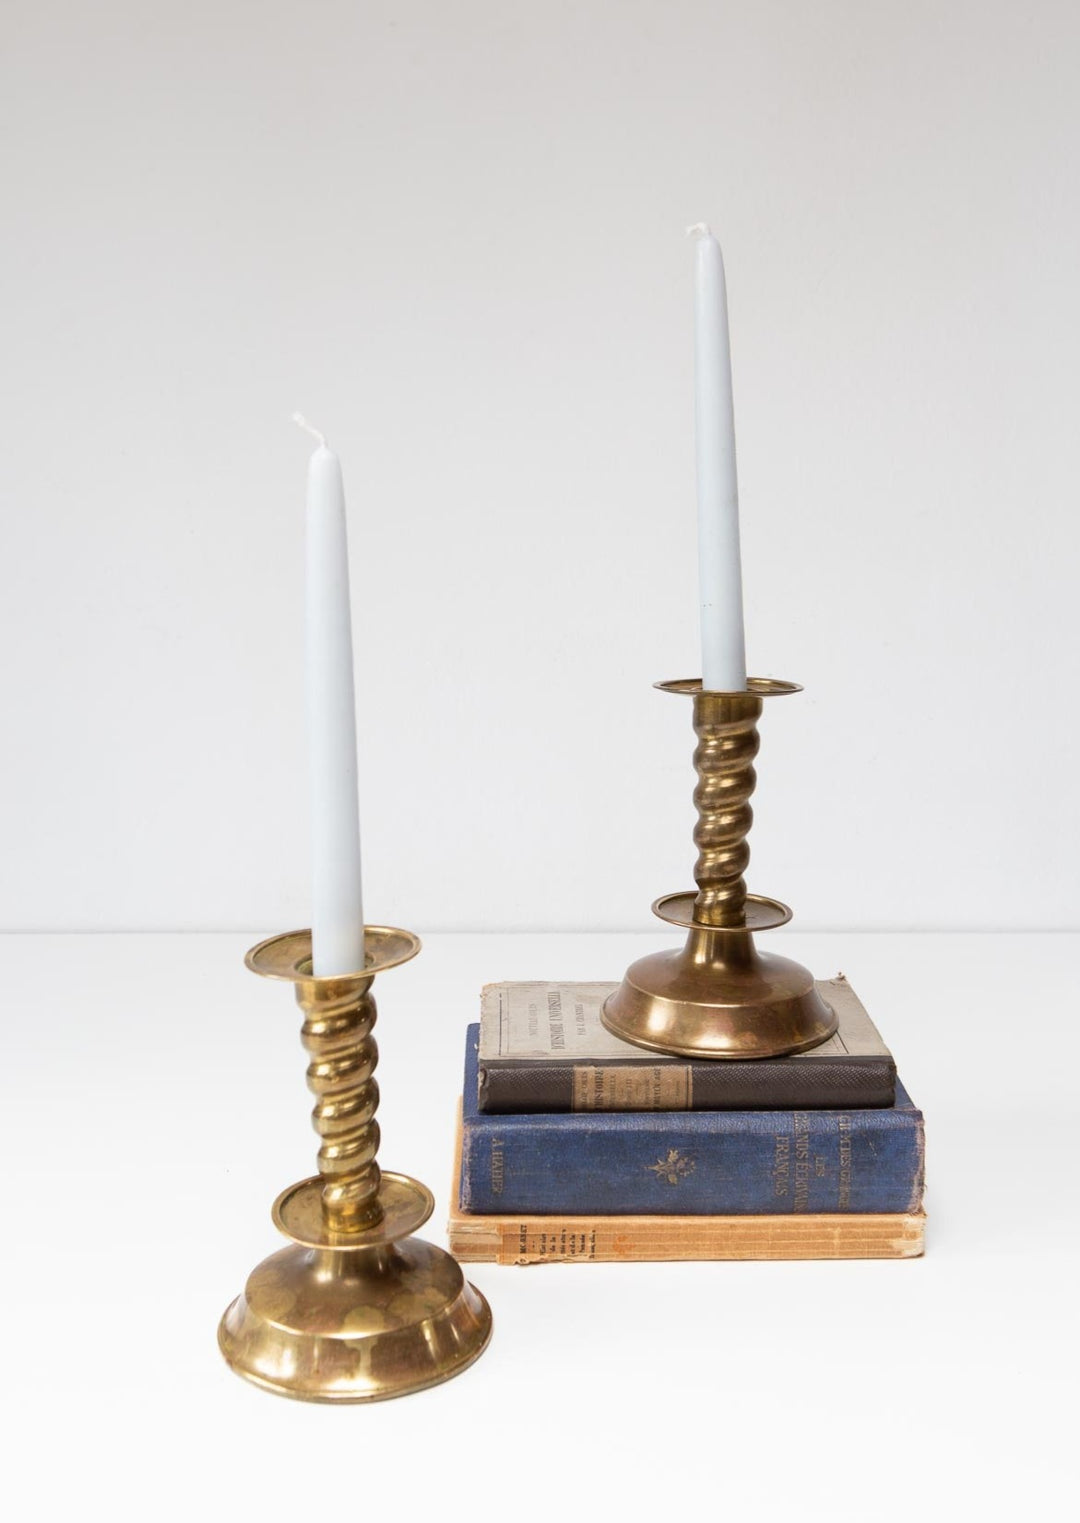 pareja antiguos candeleros suecos espiral latón antique swedish candlesticks